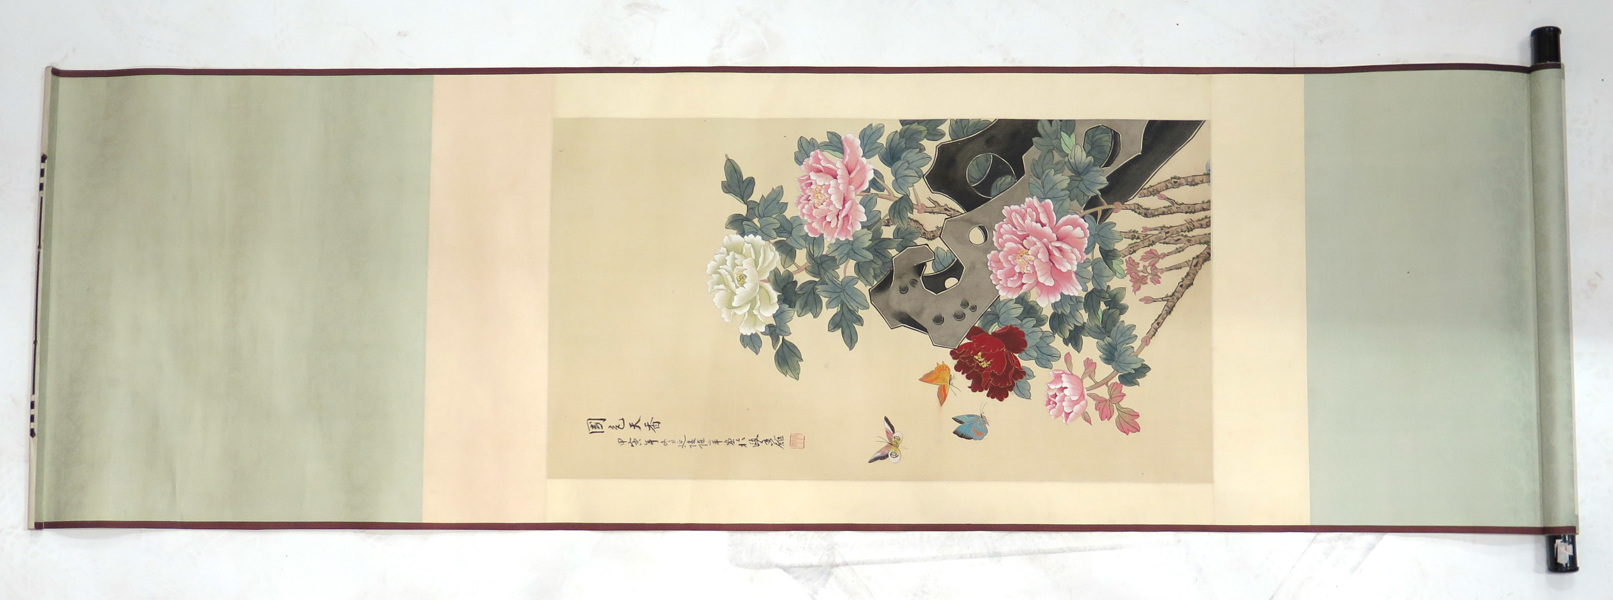 Bildrulle, gouache på papper, Kina, 1900-tal, _19422a_lg.jpeg